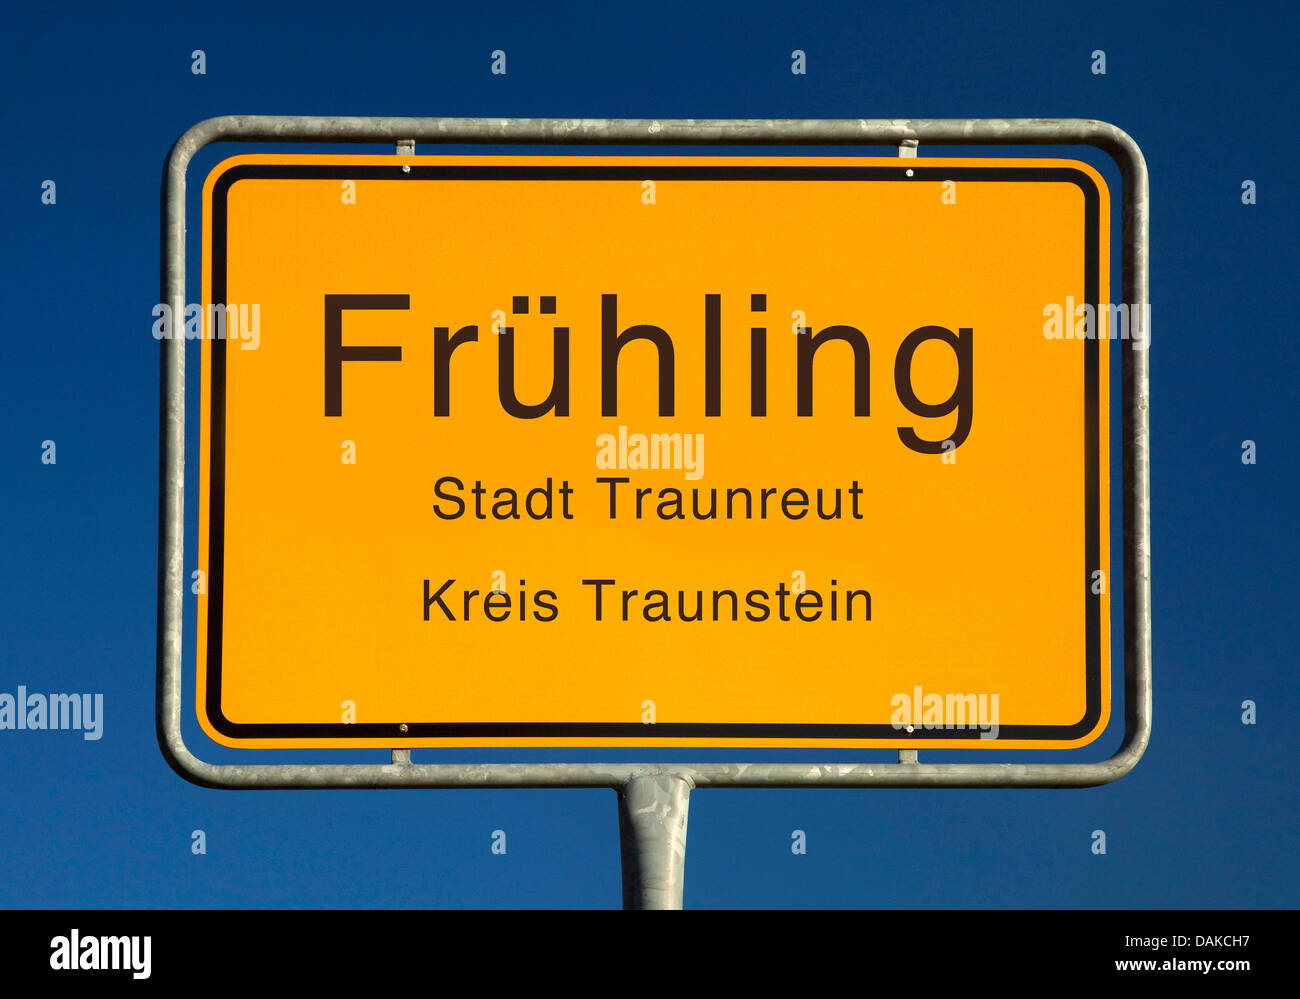 Fruehling place name sign, Germany, Bavaria, Kreis Traunstein, Fruehling Stock Photo